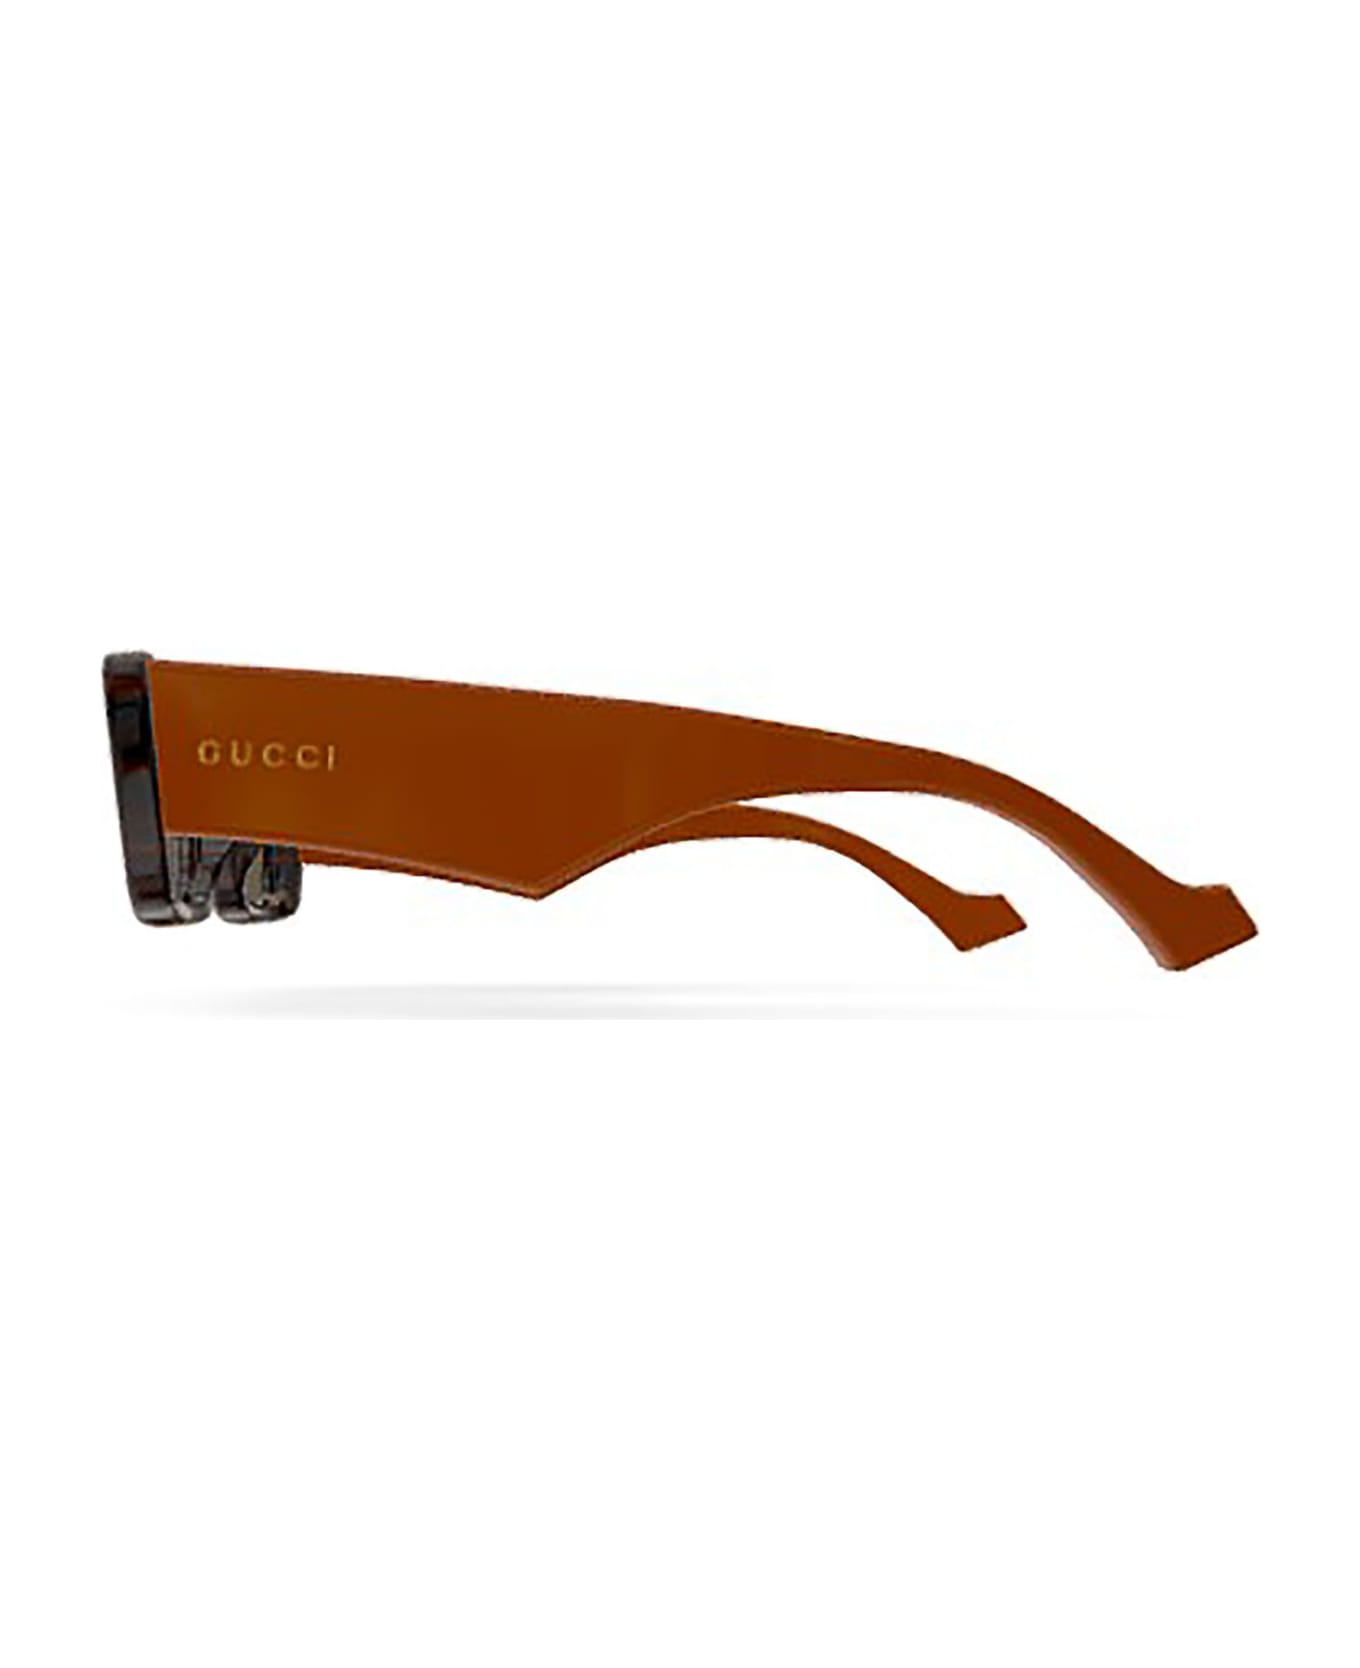 Gucci Eyewear GG1331S Sunglasses - Havana Orange Brown